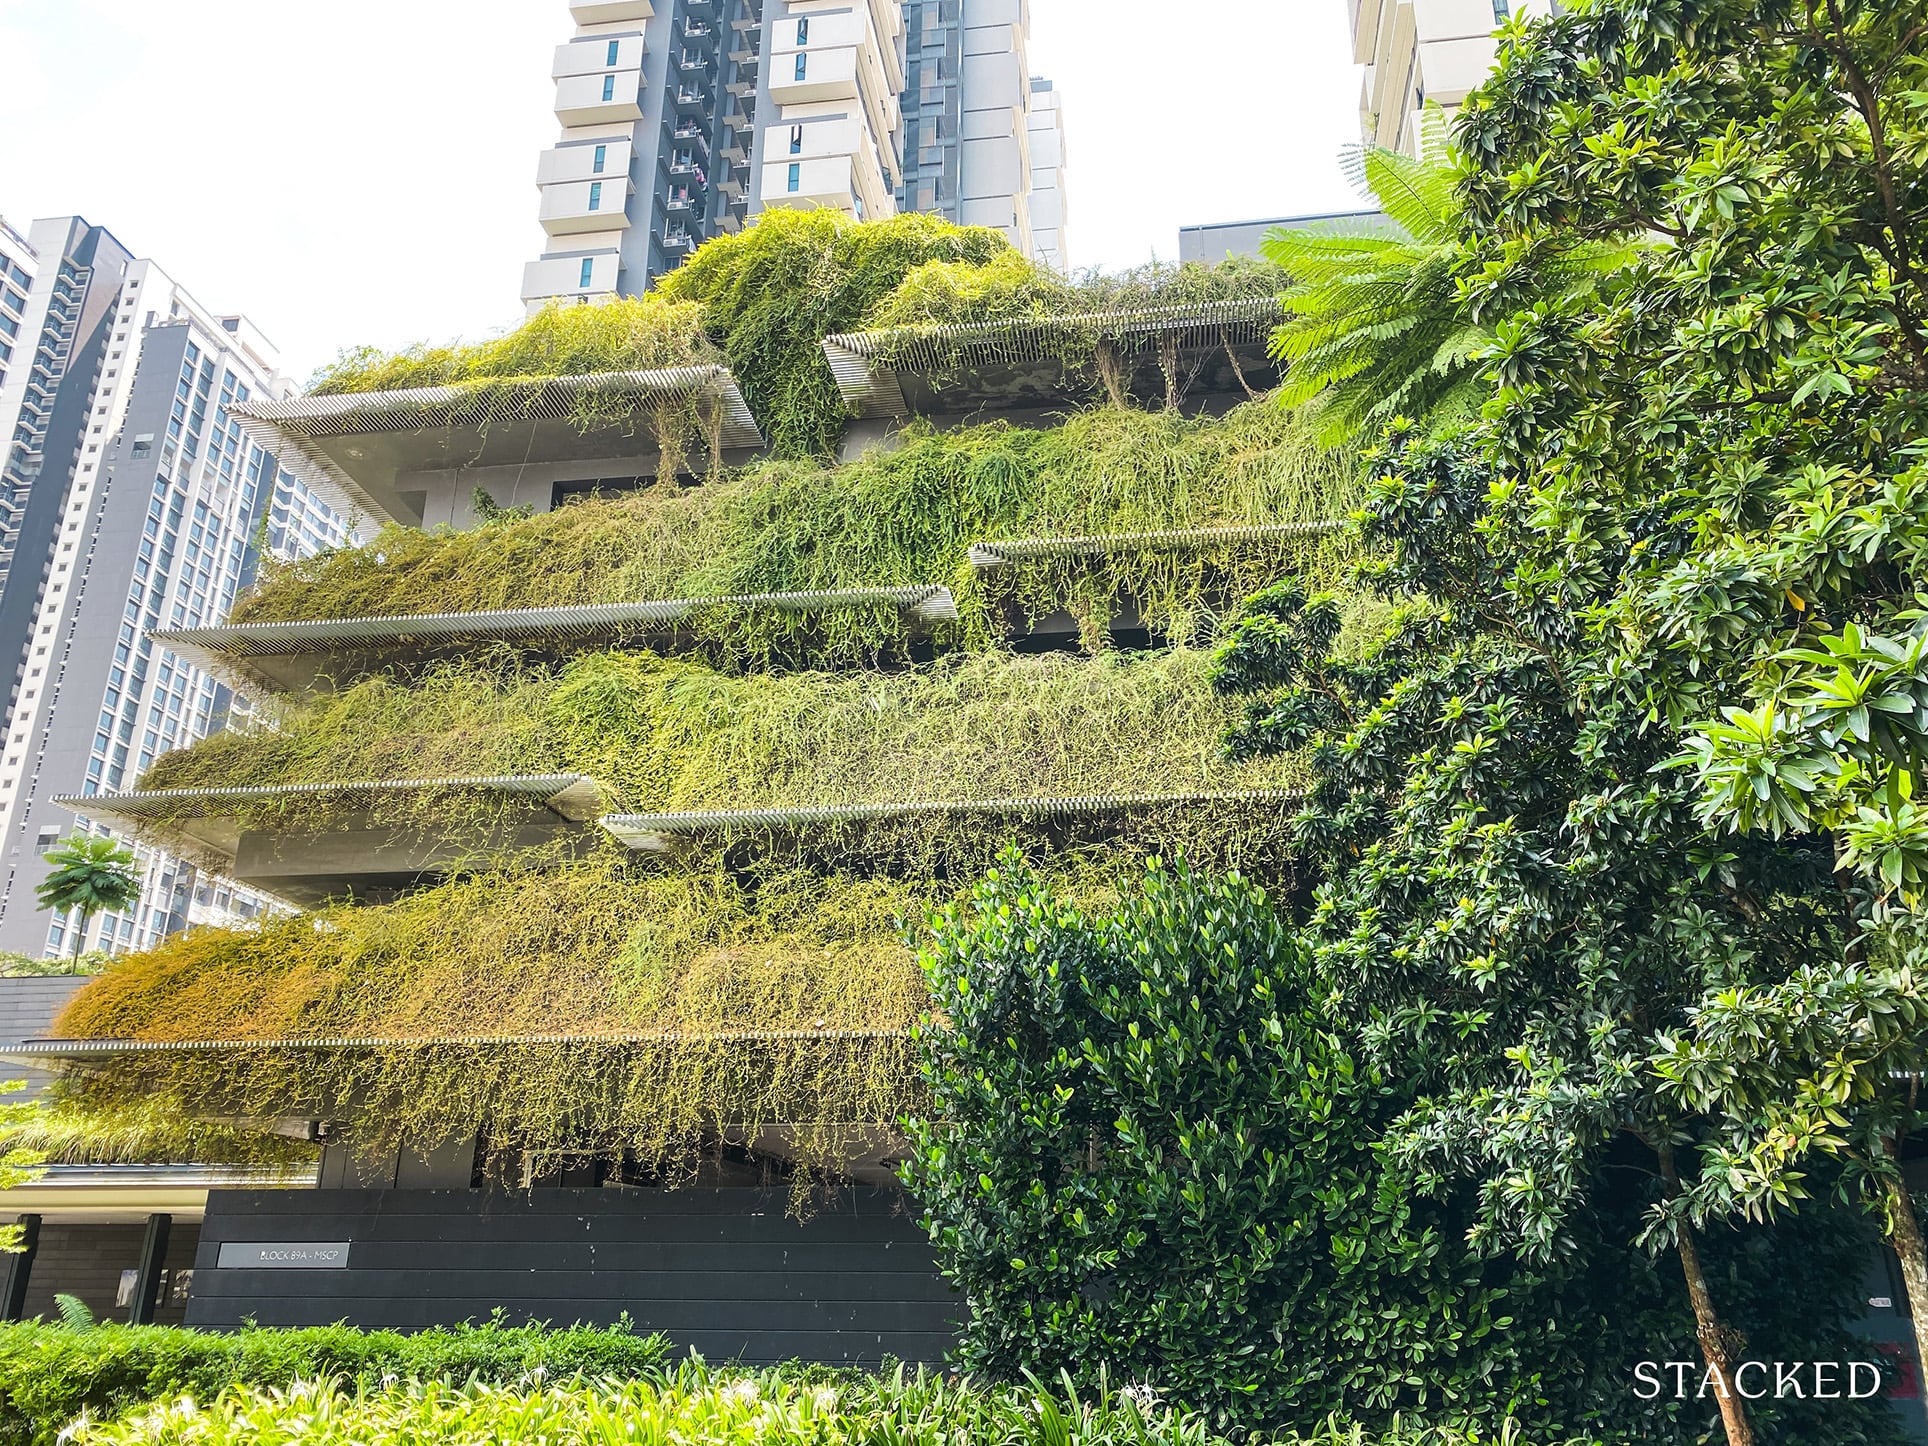 SkyTerrace @ Dawson Multi Storey Carpark Terrace Plants